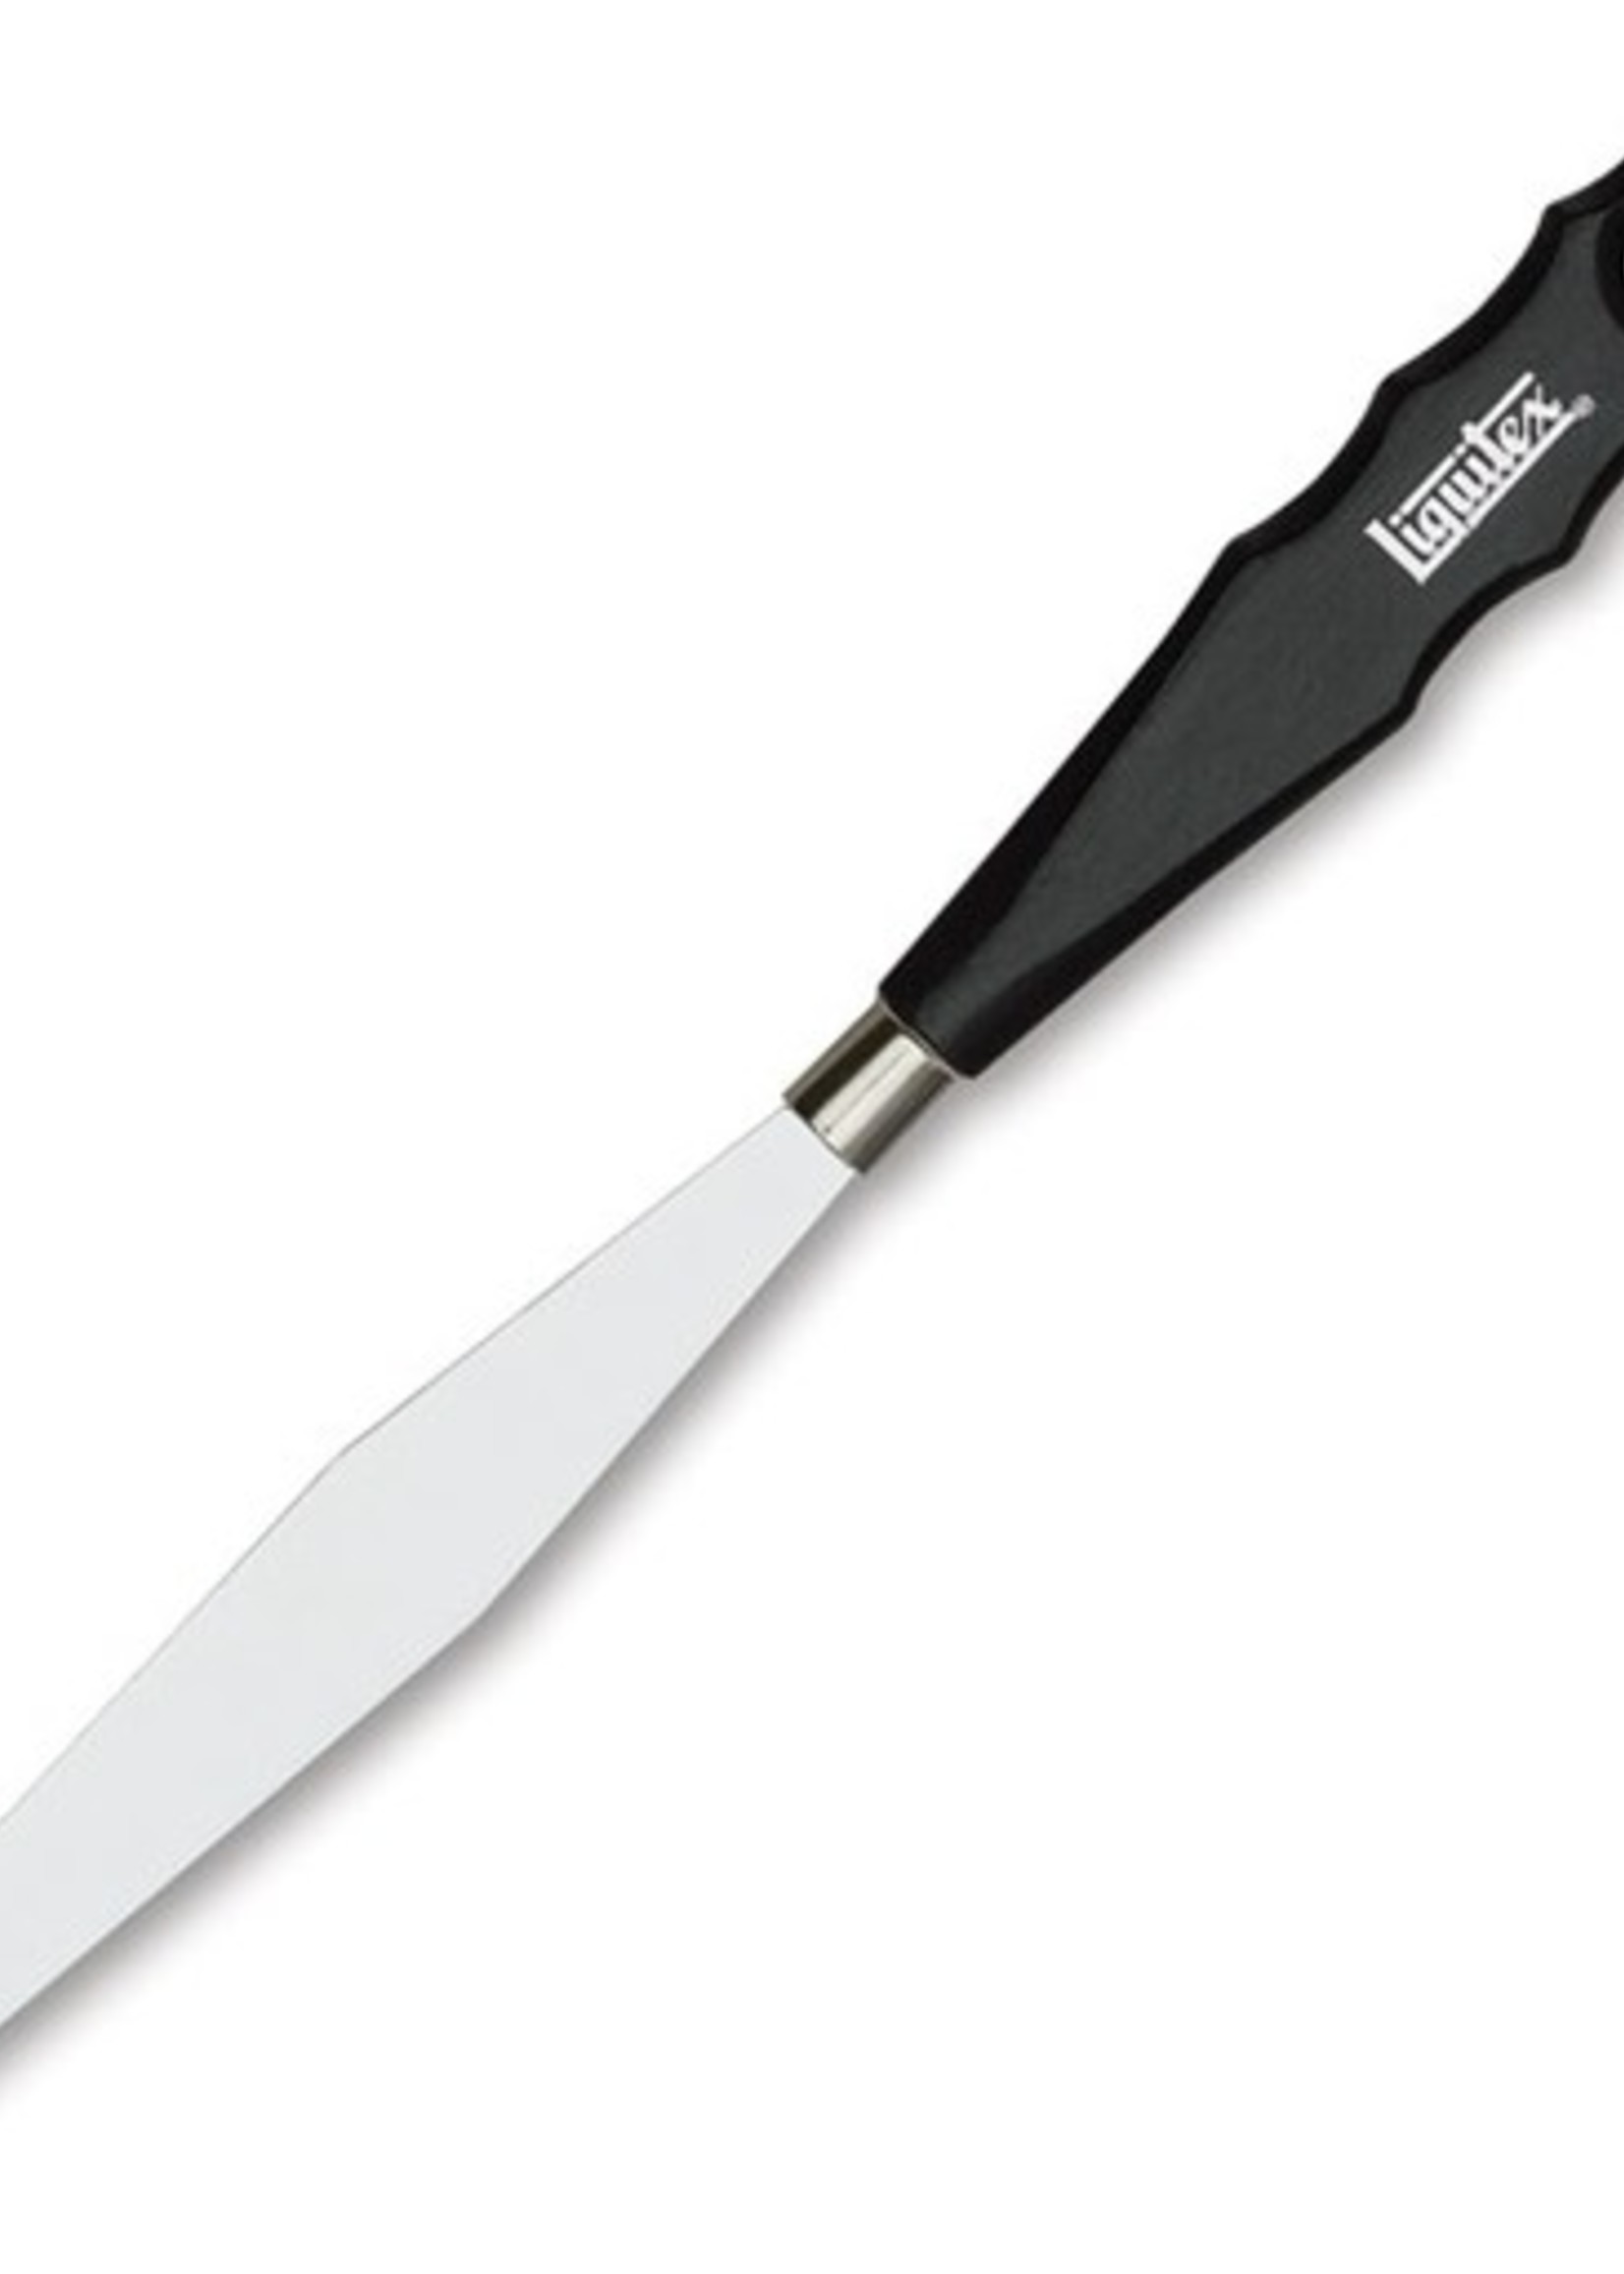 LIQUITEX LIQUITEX PALETTE KNIFE SMALL 9